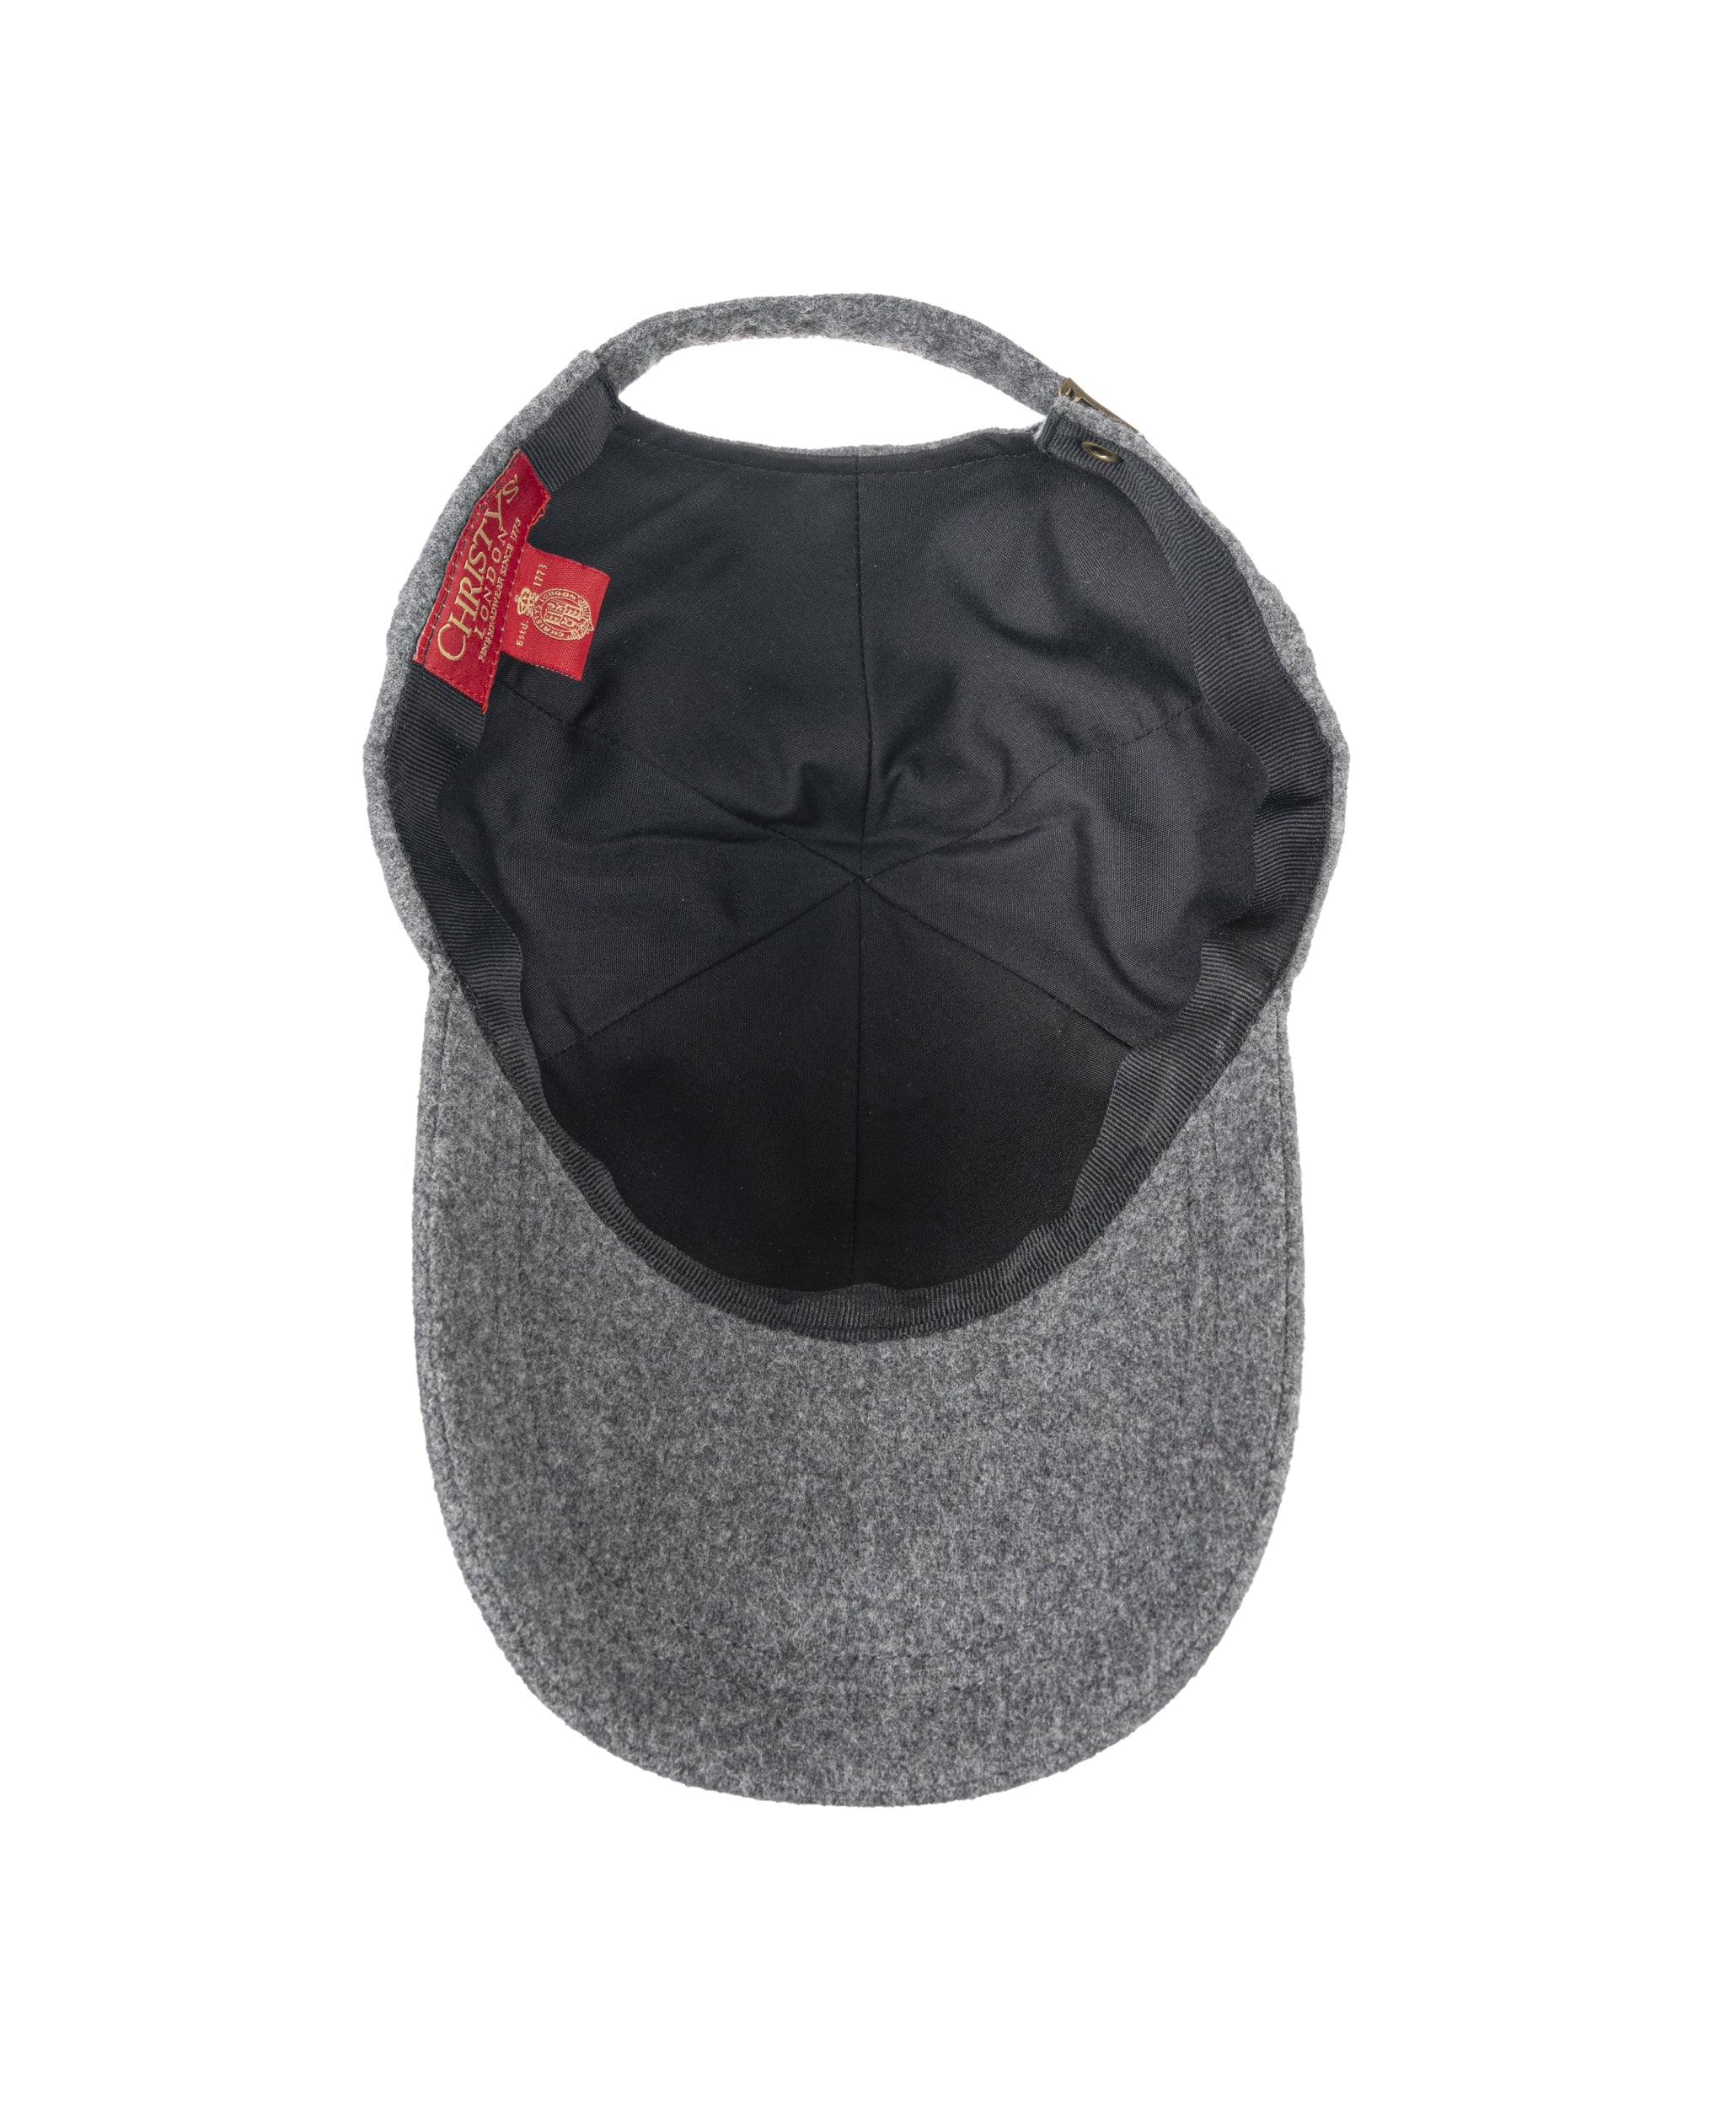 Josh baseball cap in cashmere/wool blend fabric in Grey